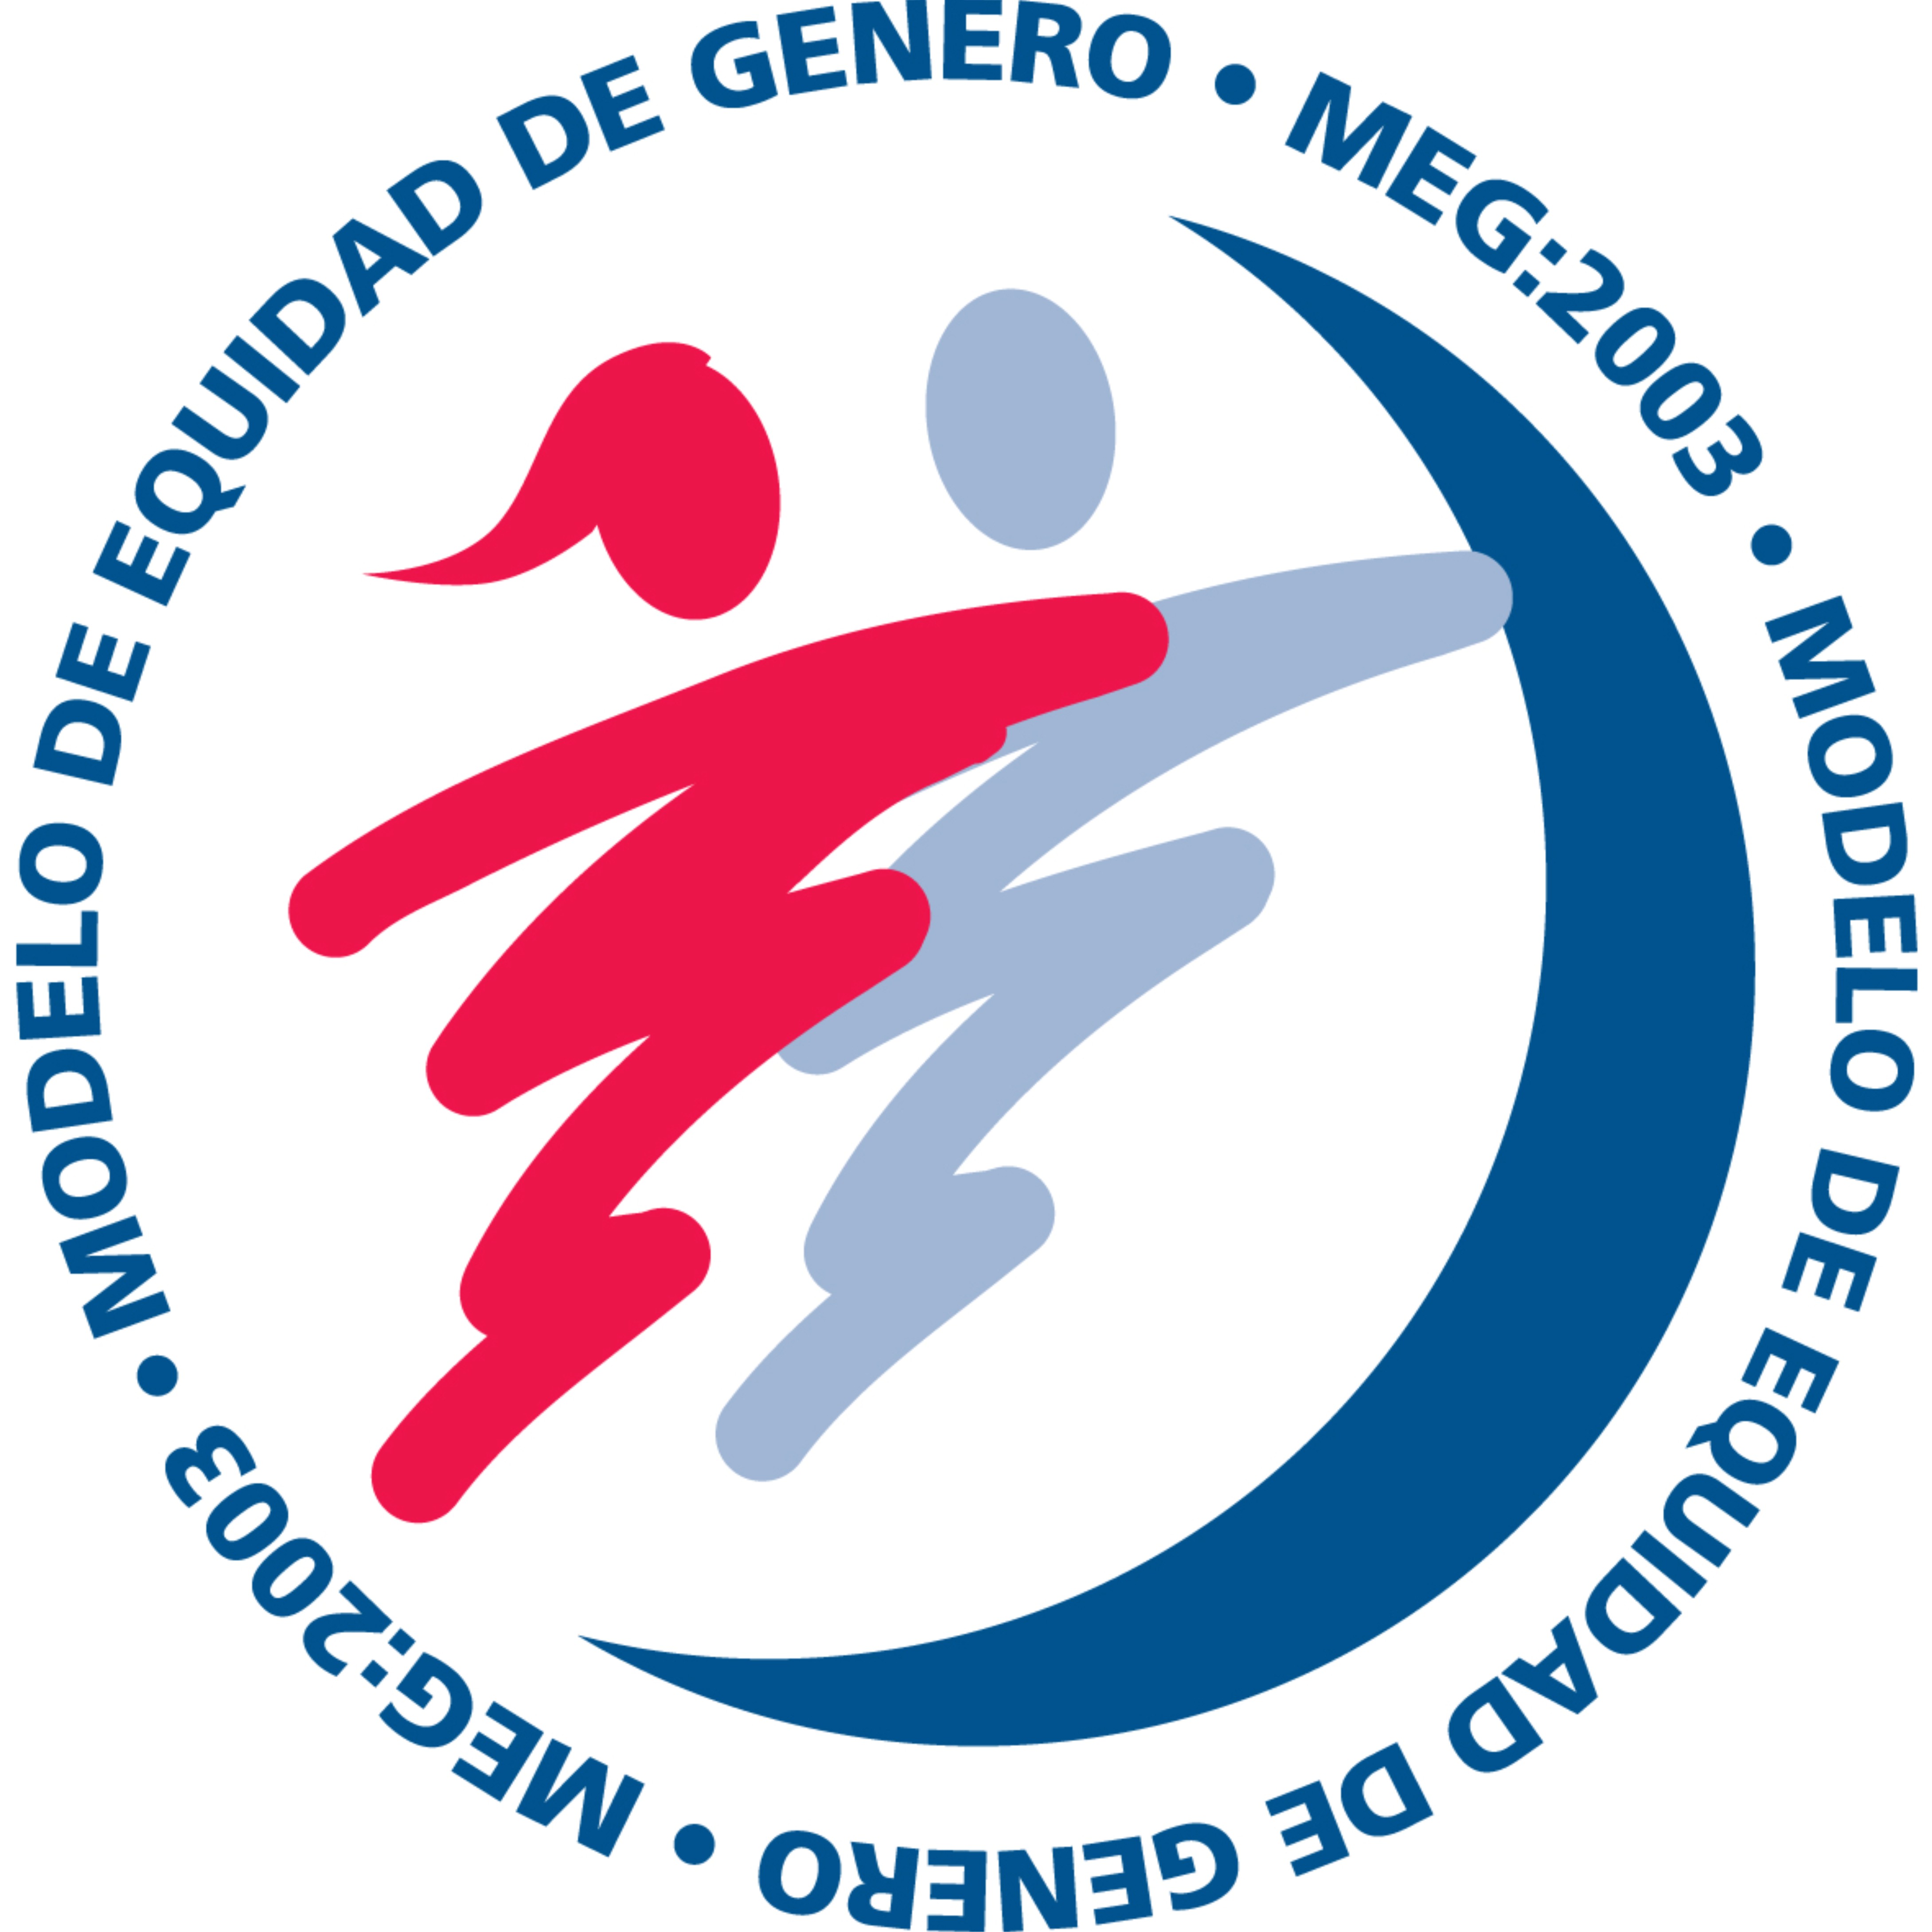 Modelo de Equidad de Género Logo photo - 1